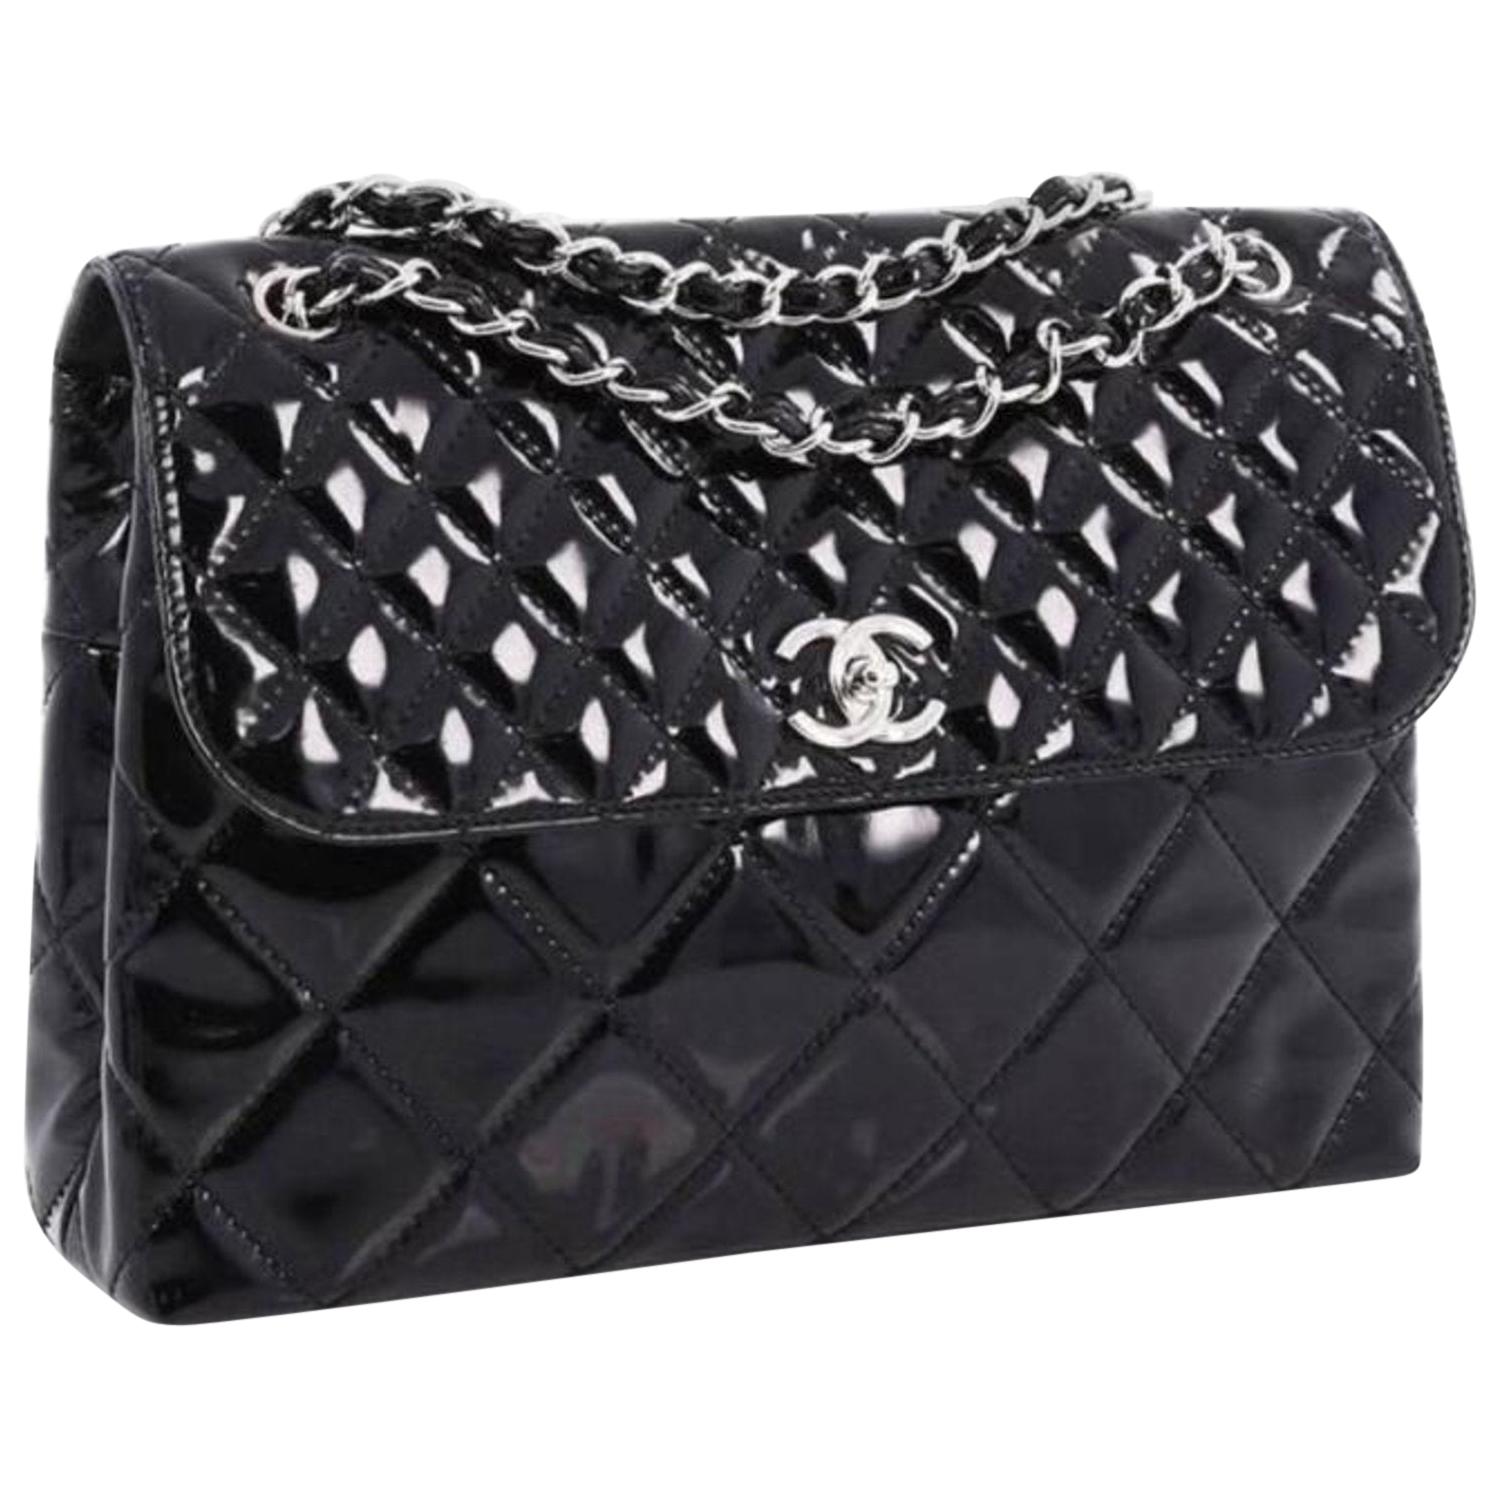 Chanel Business Flap Patent Single Flap Maxi Size Bag (Circa 2010)